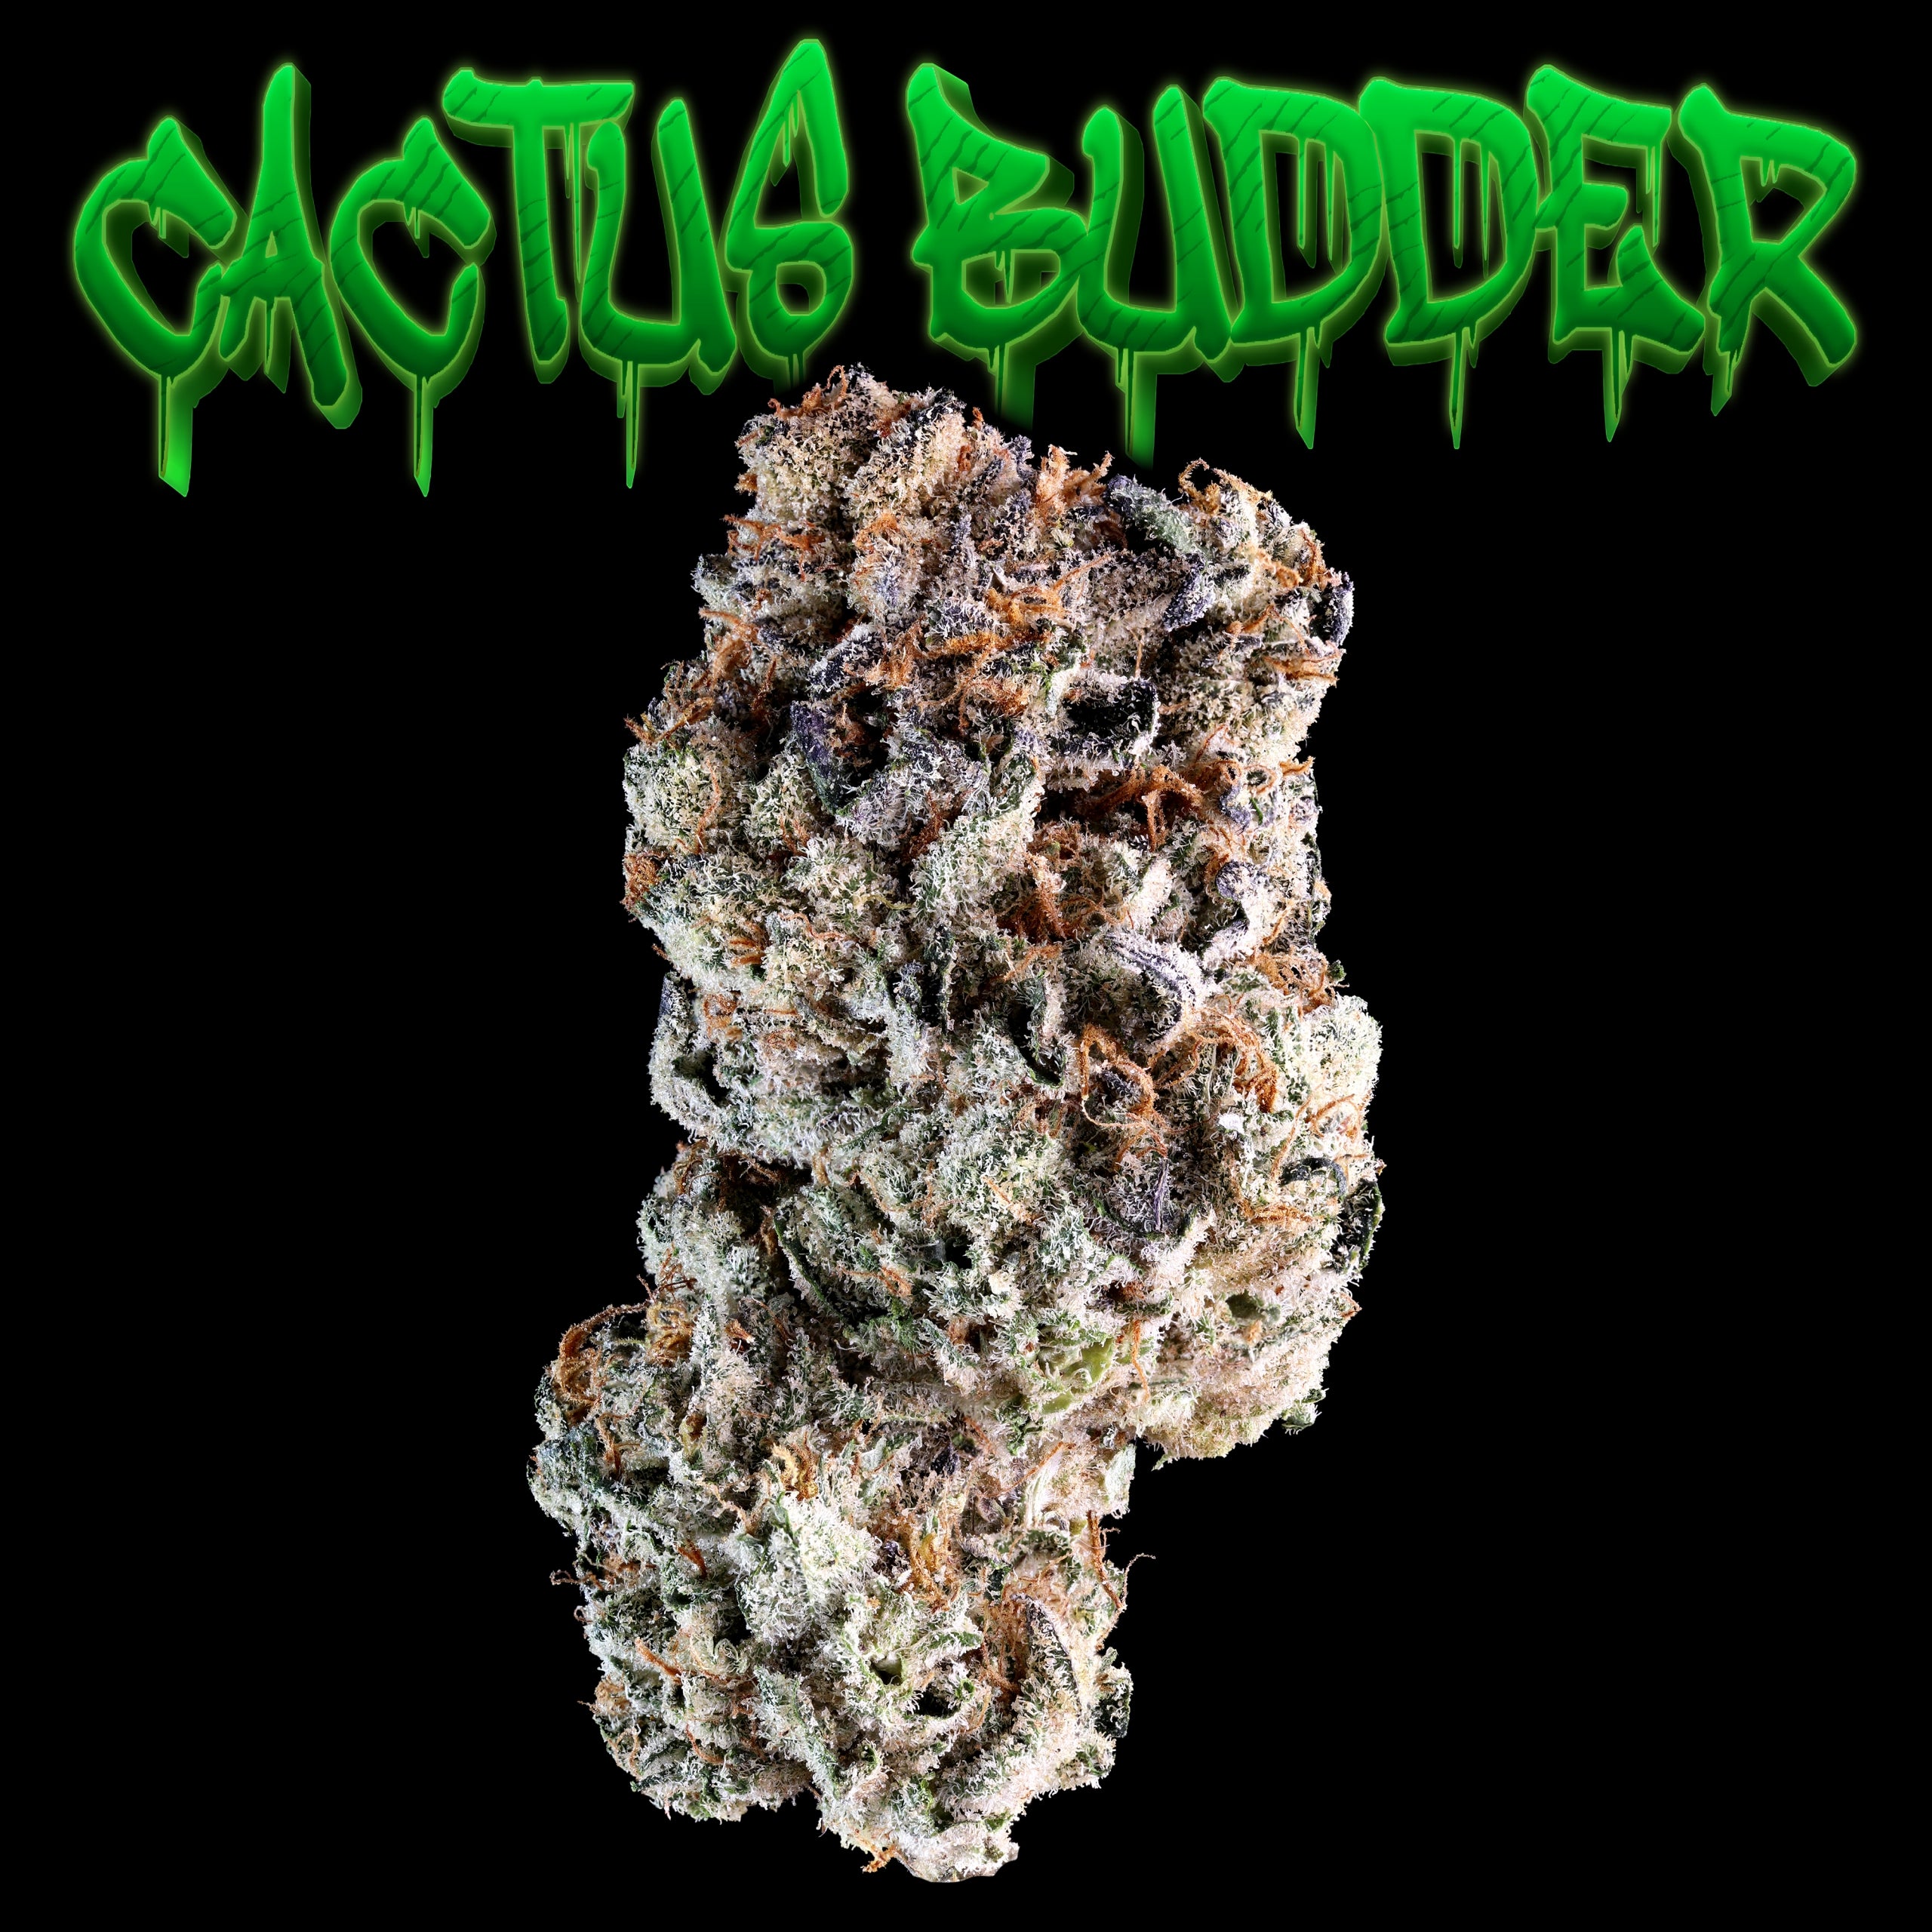 Cactus Budder